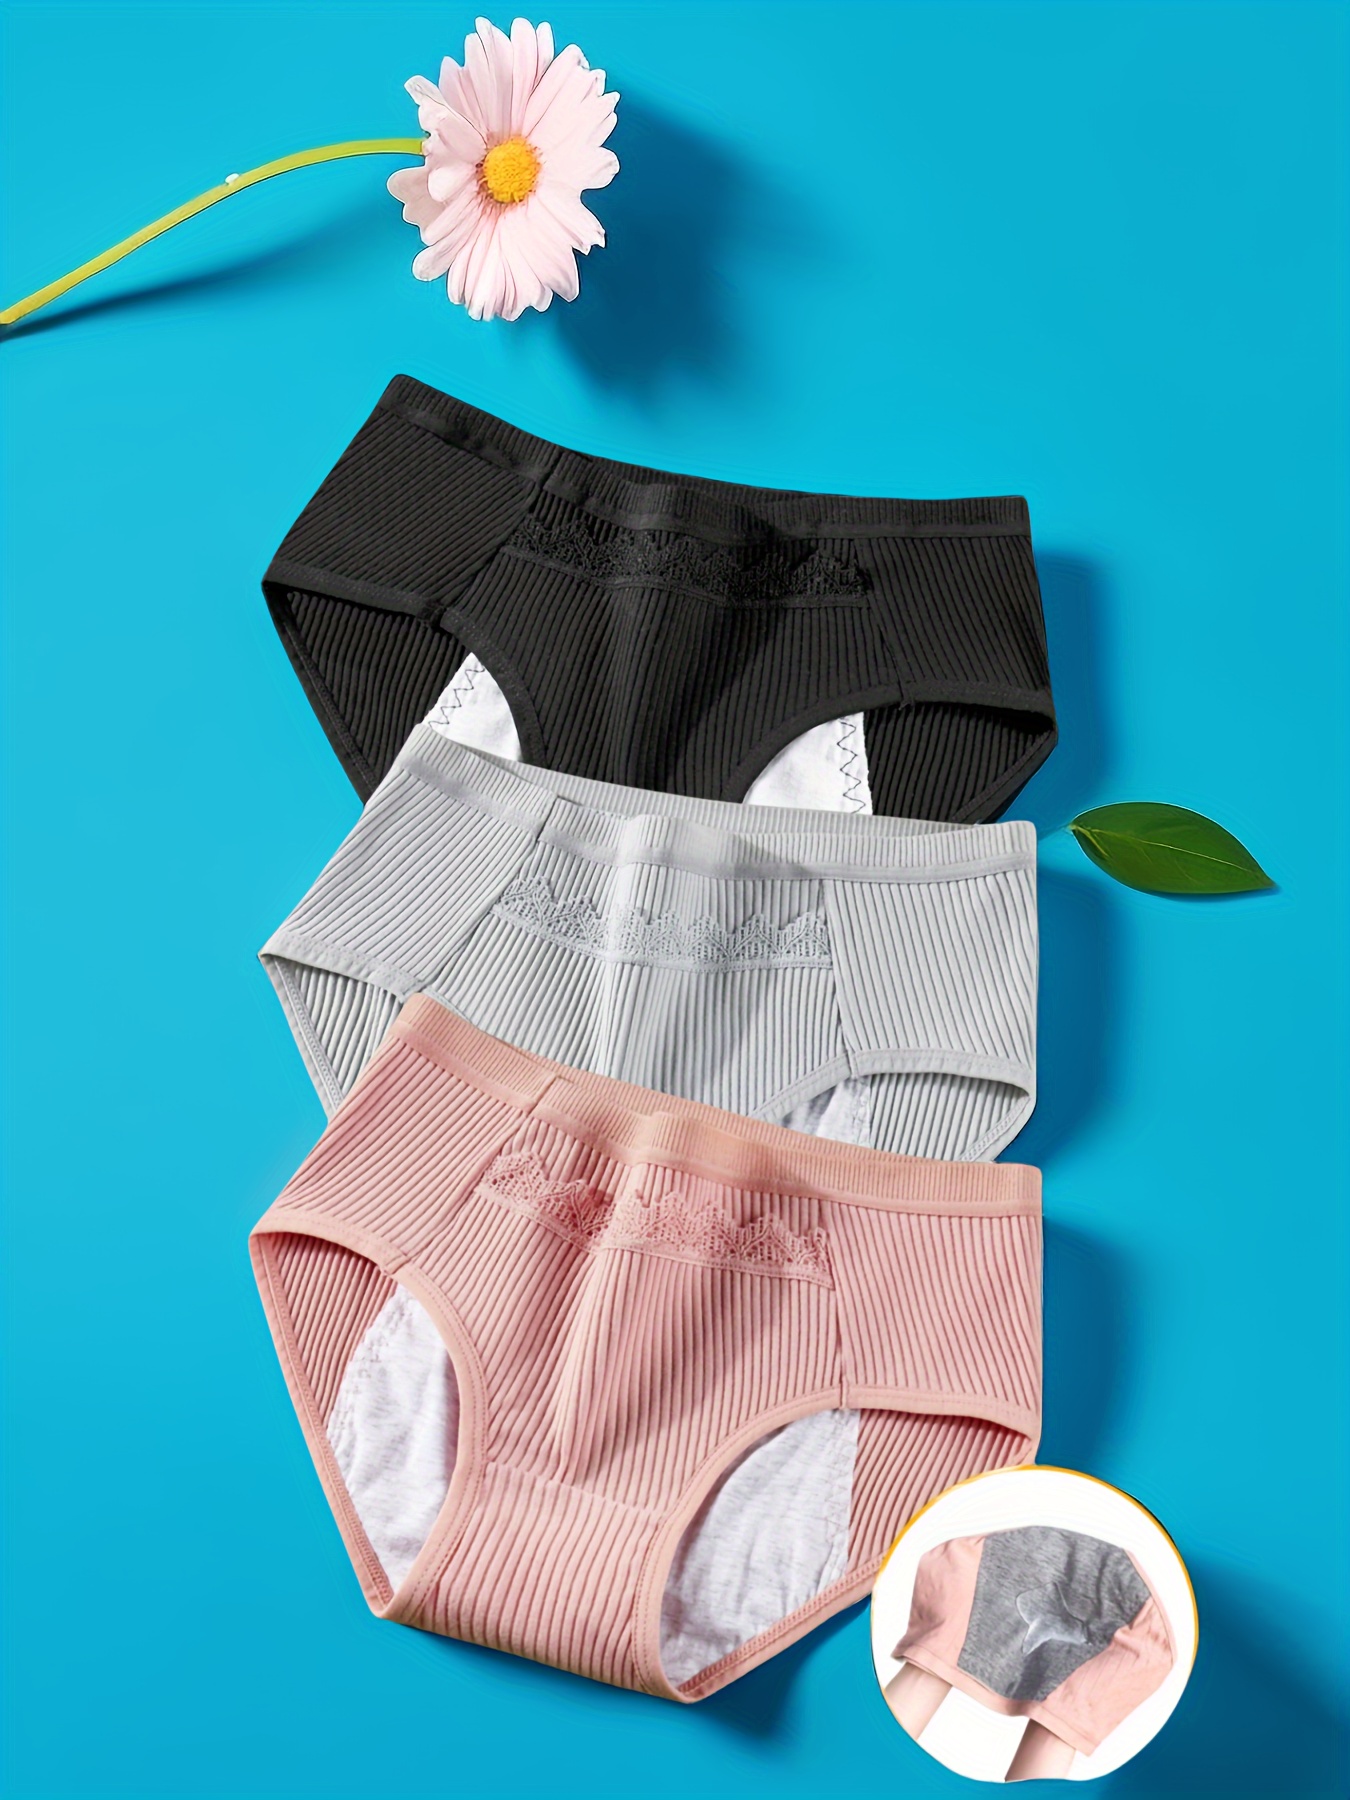 Cotton Period Panties Soft Leak proof Intimates Briefs - Temu